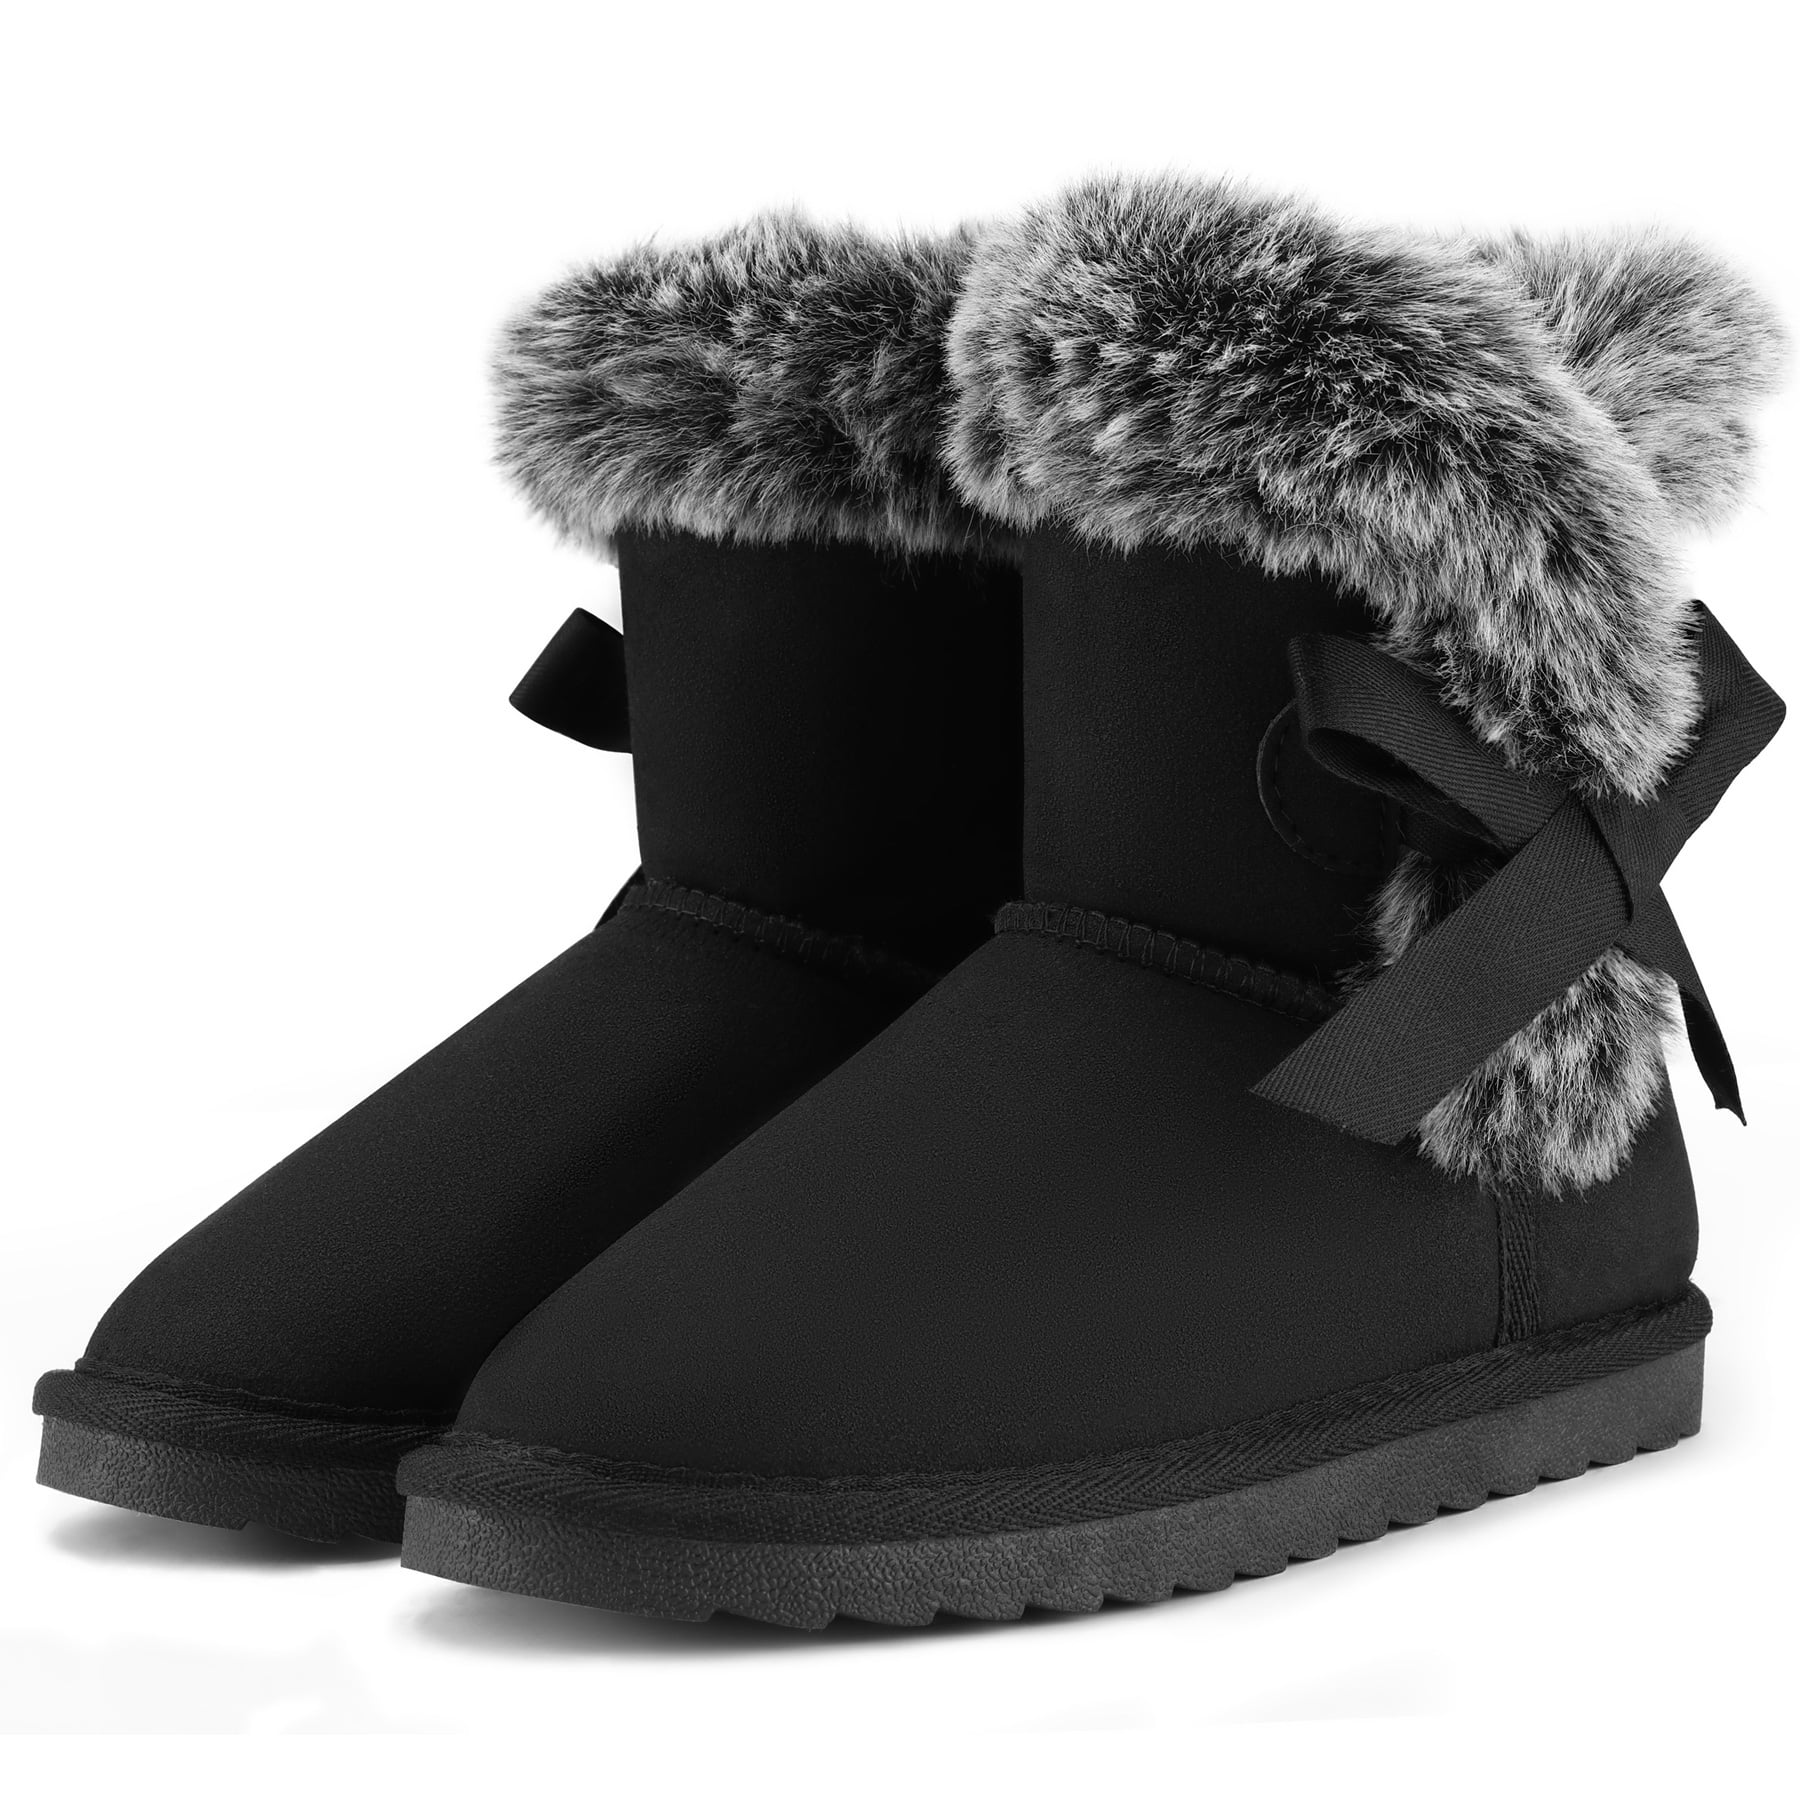 K KomForme Girls Kids Snow Boots for Warmth Black Non-Slip Outdoor ...